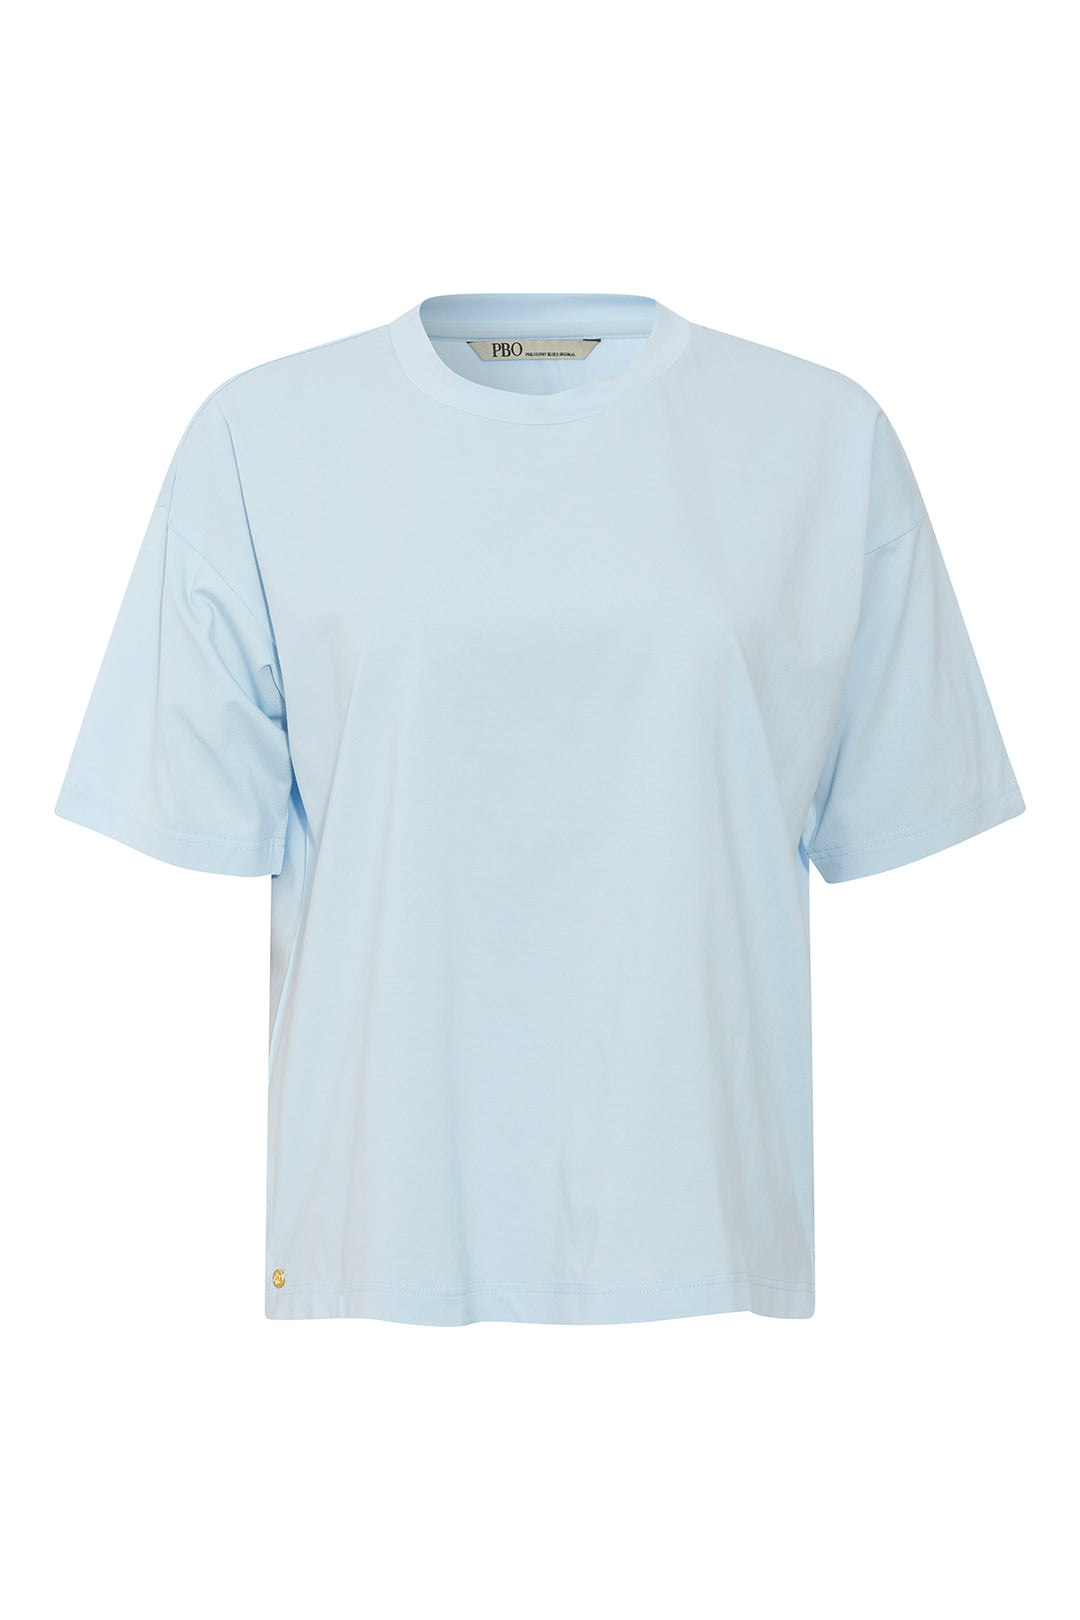 PBO Bravo T-shirt T-SHIRTS 213 Sky blue